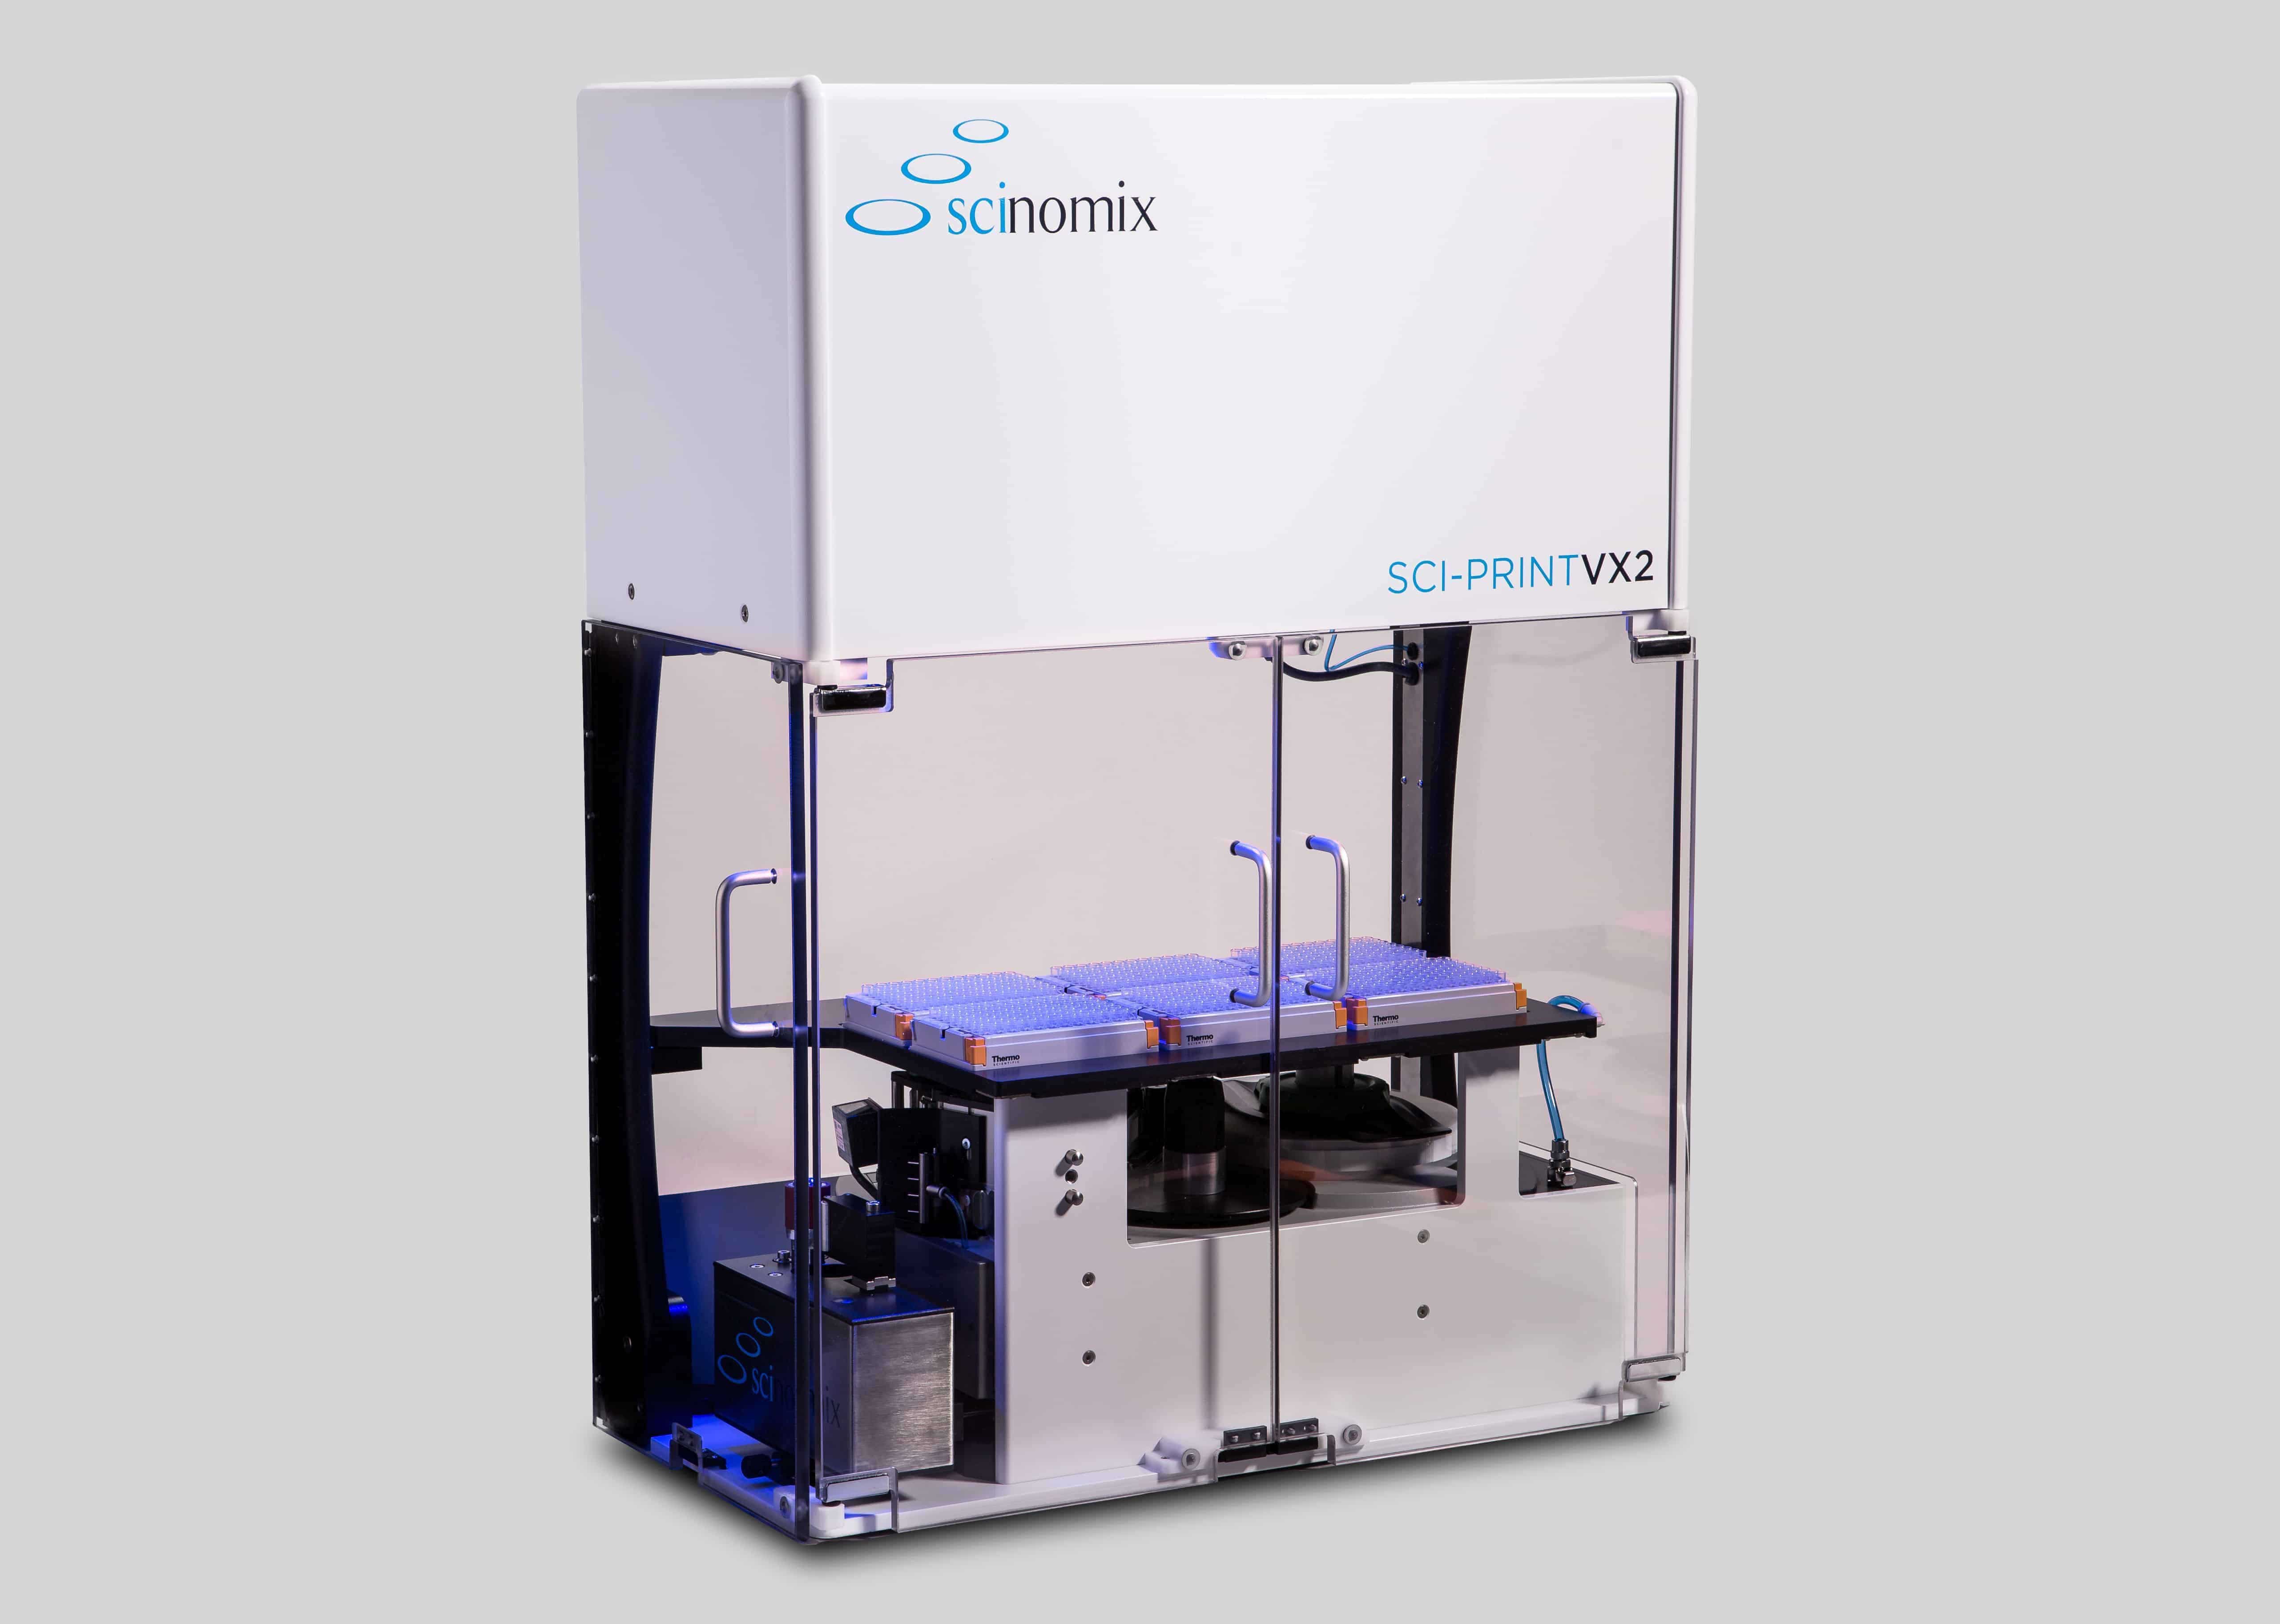 The Sci-Print VX2